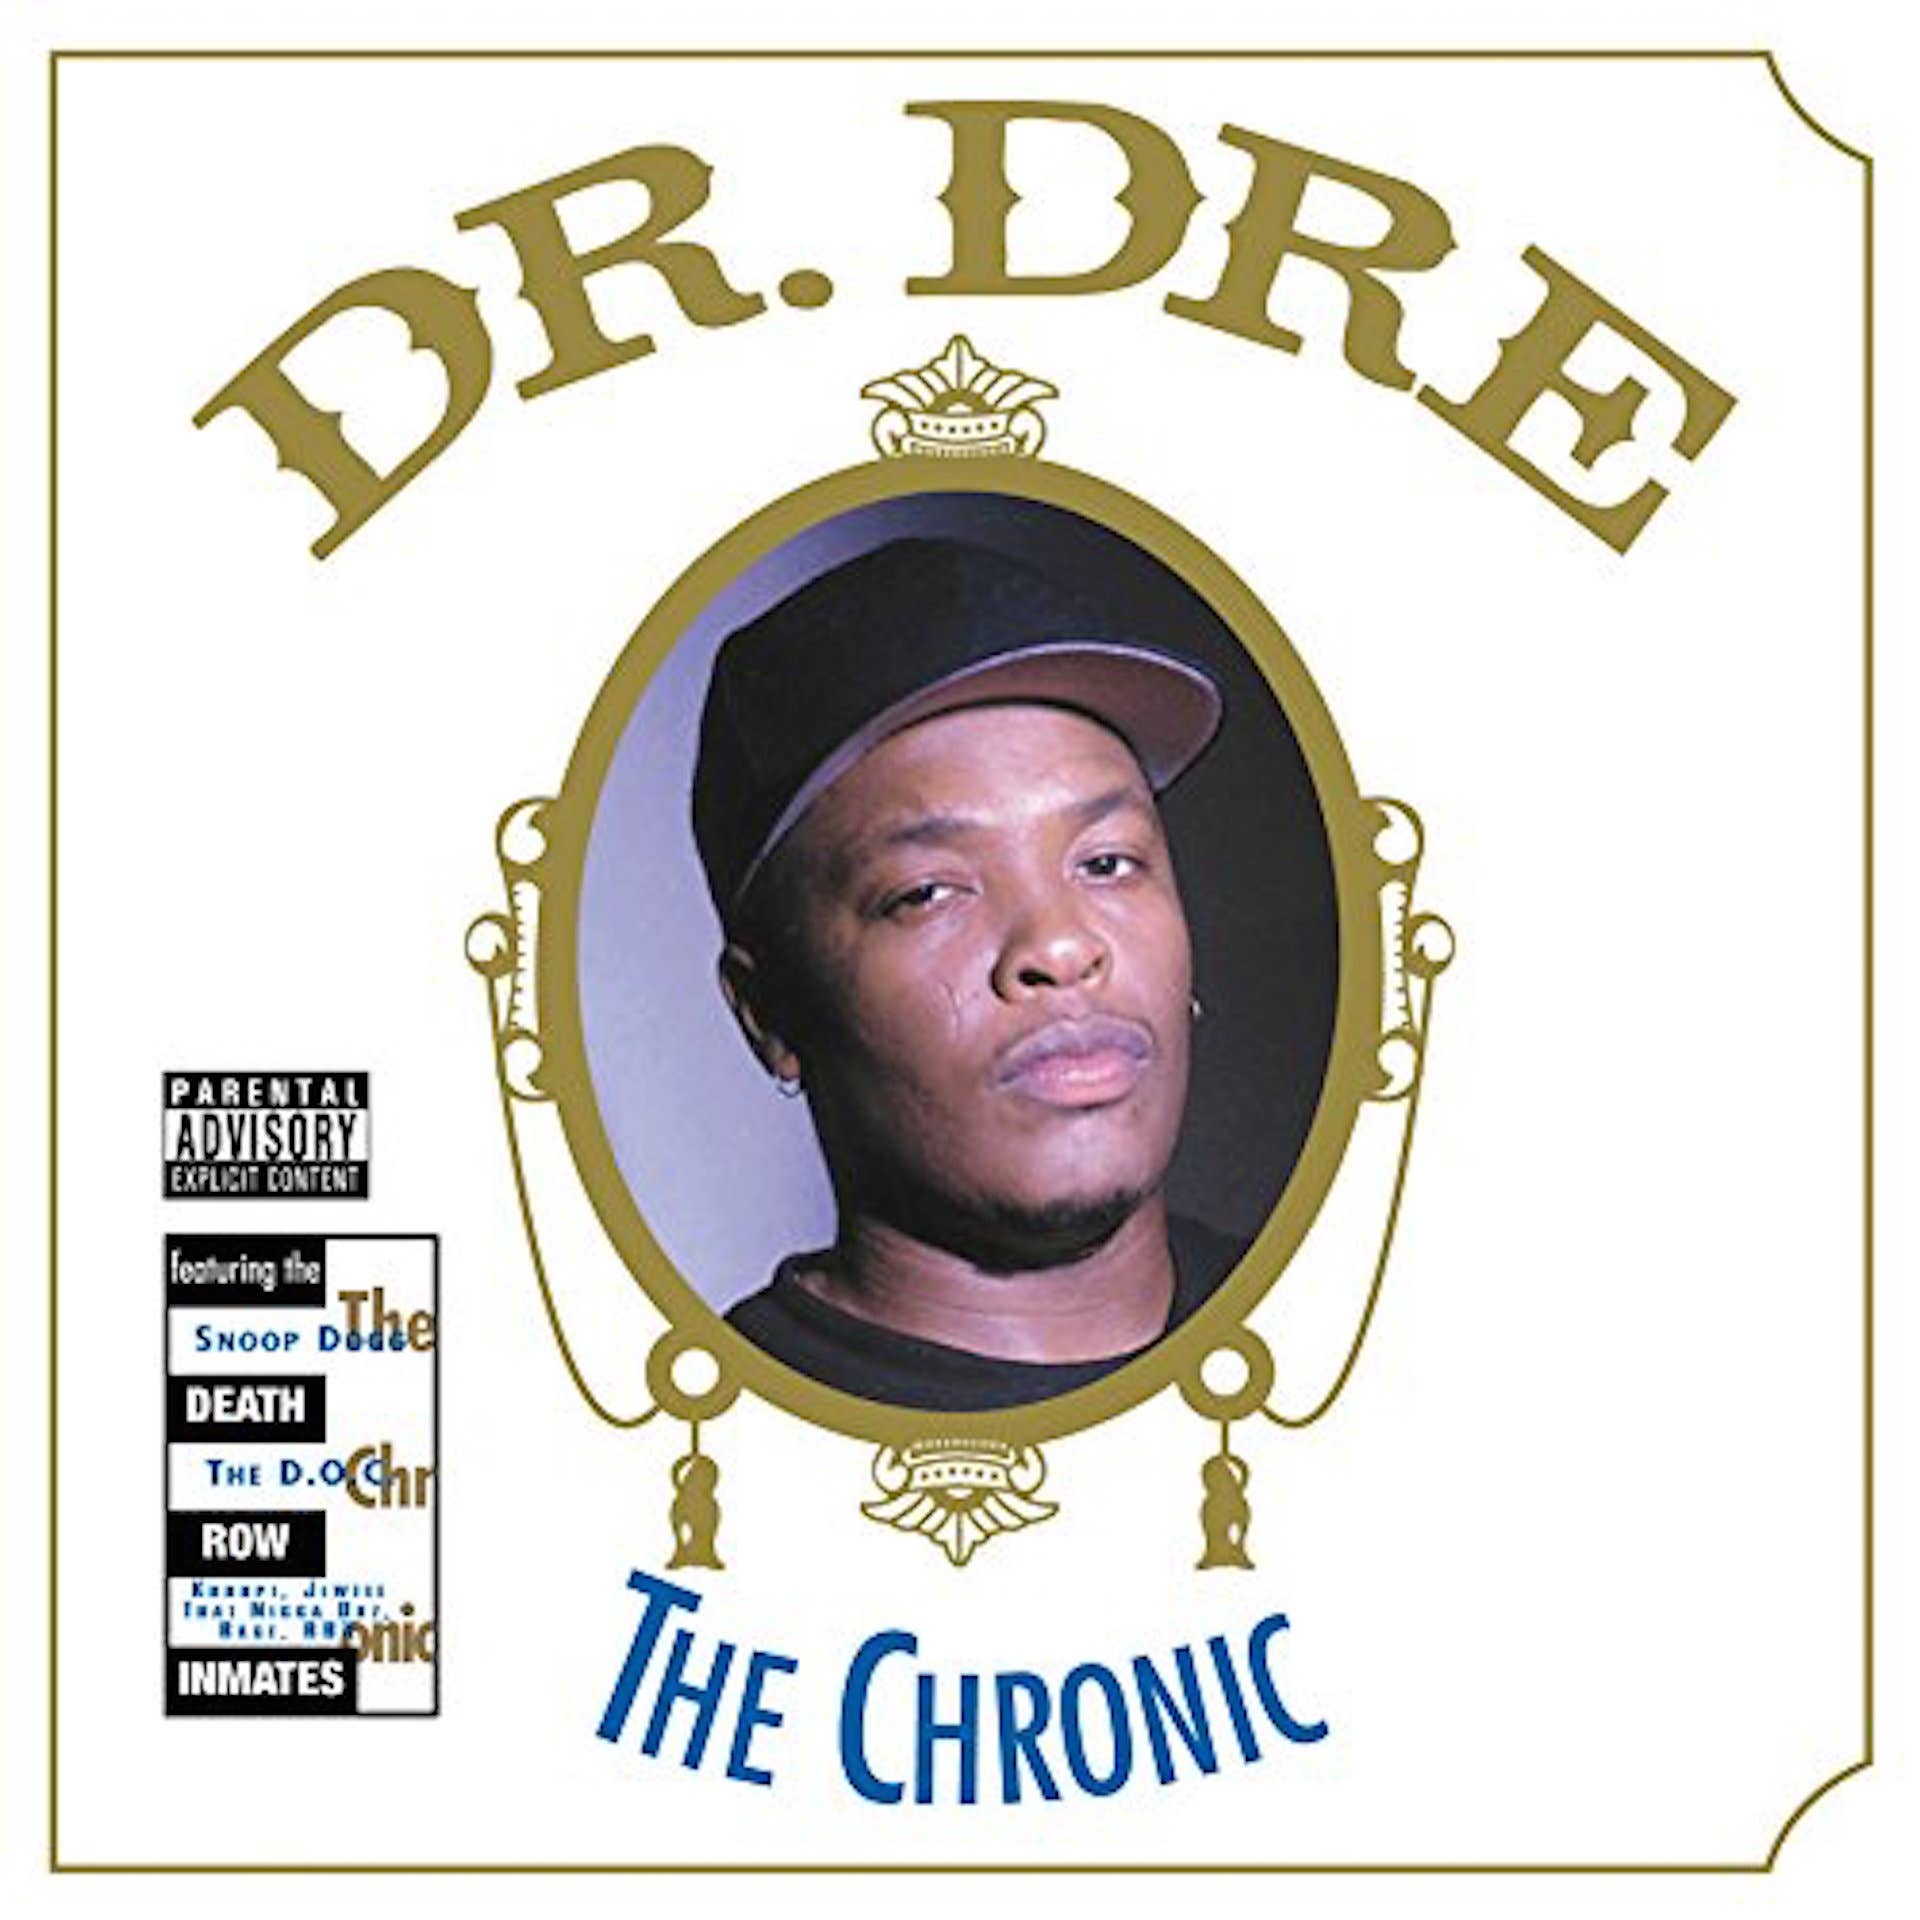 'The Chronic' album cover